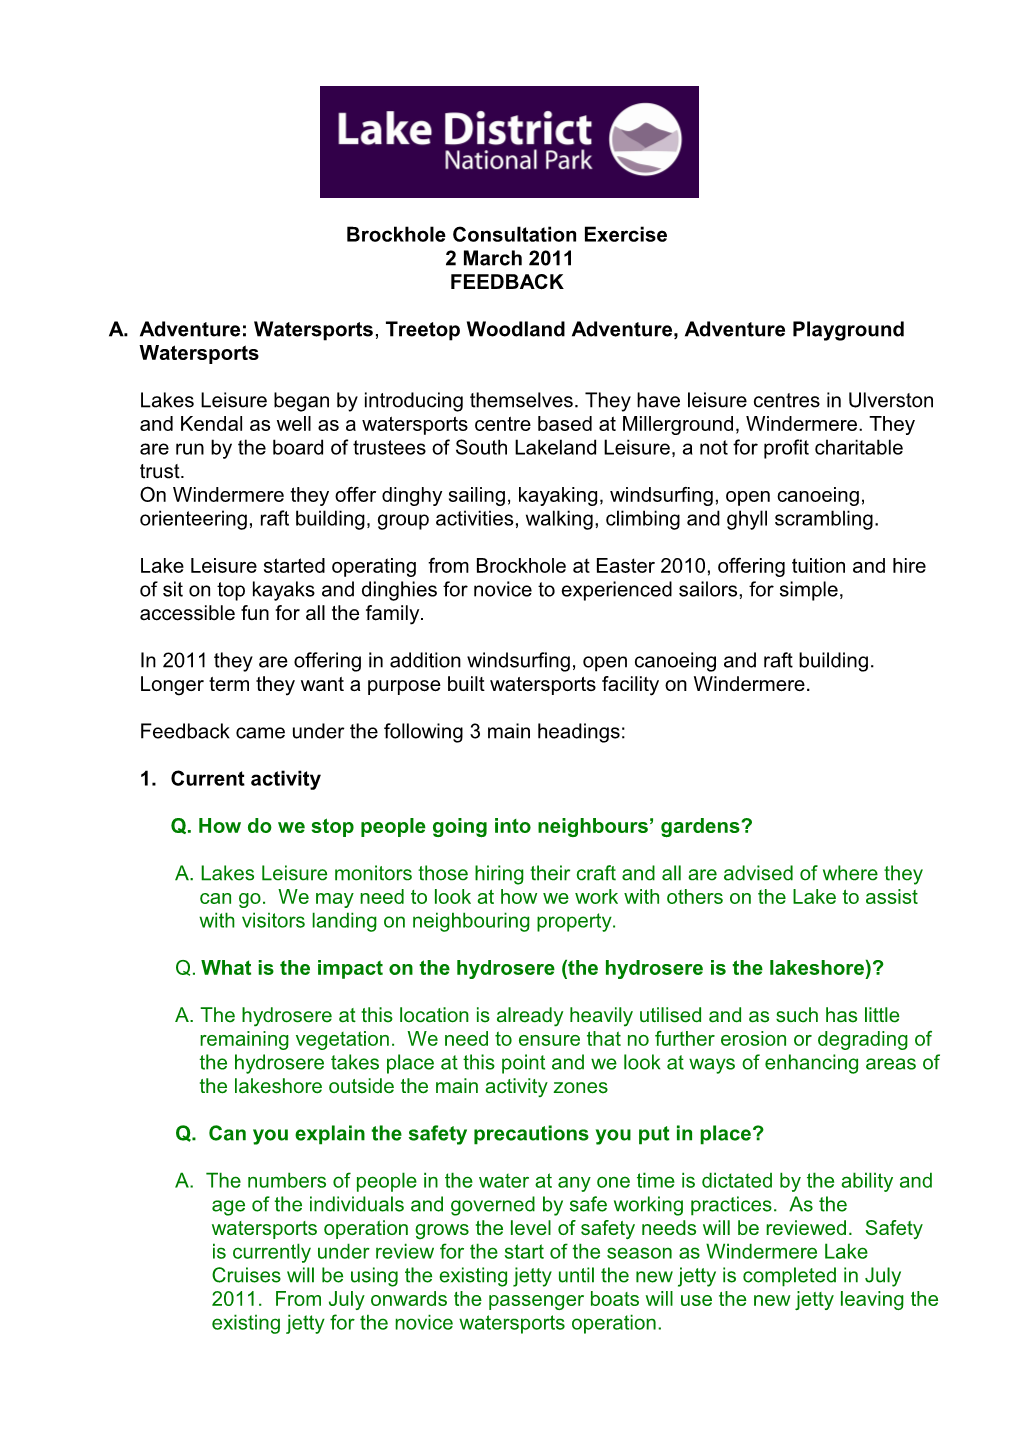 Brockhole Consultation Exercise 2 March 2011, 1